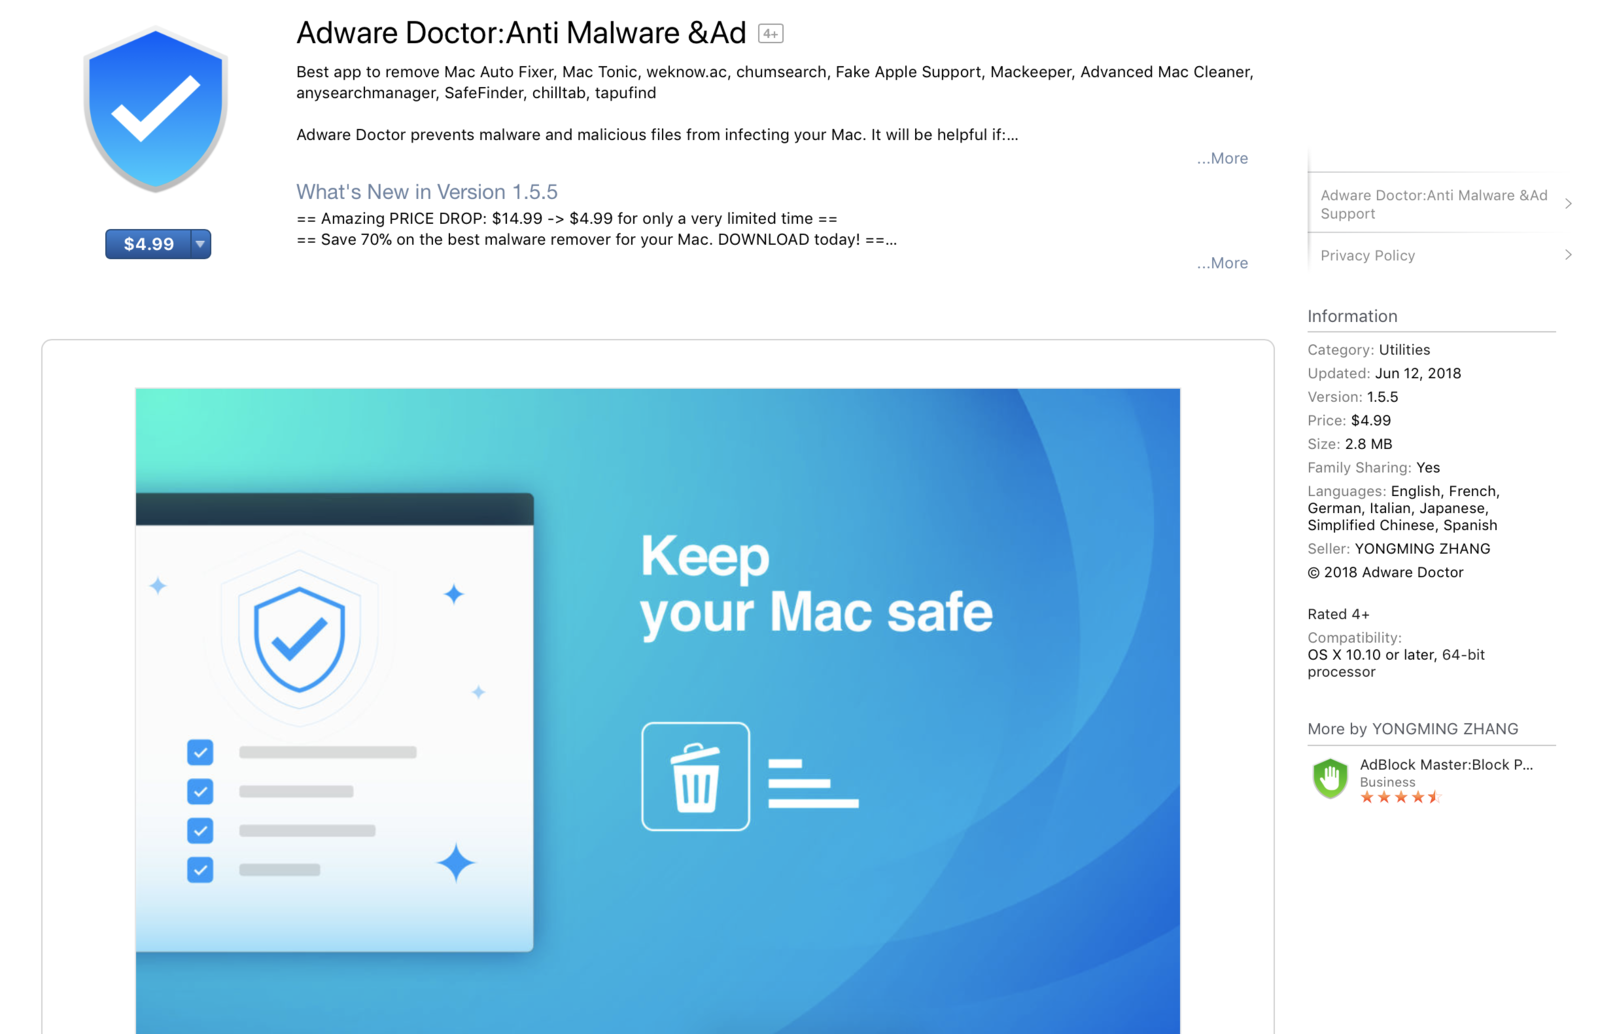 delete advanced mac cleaner from macbook